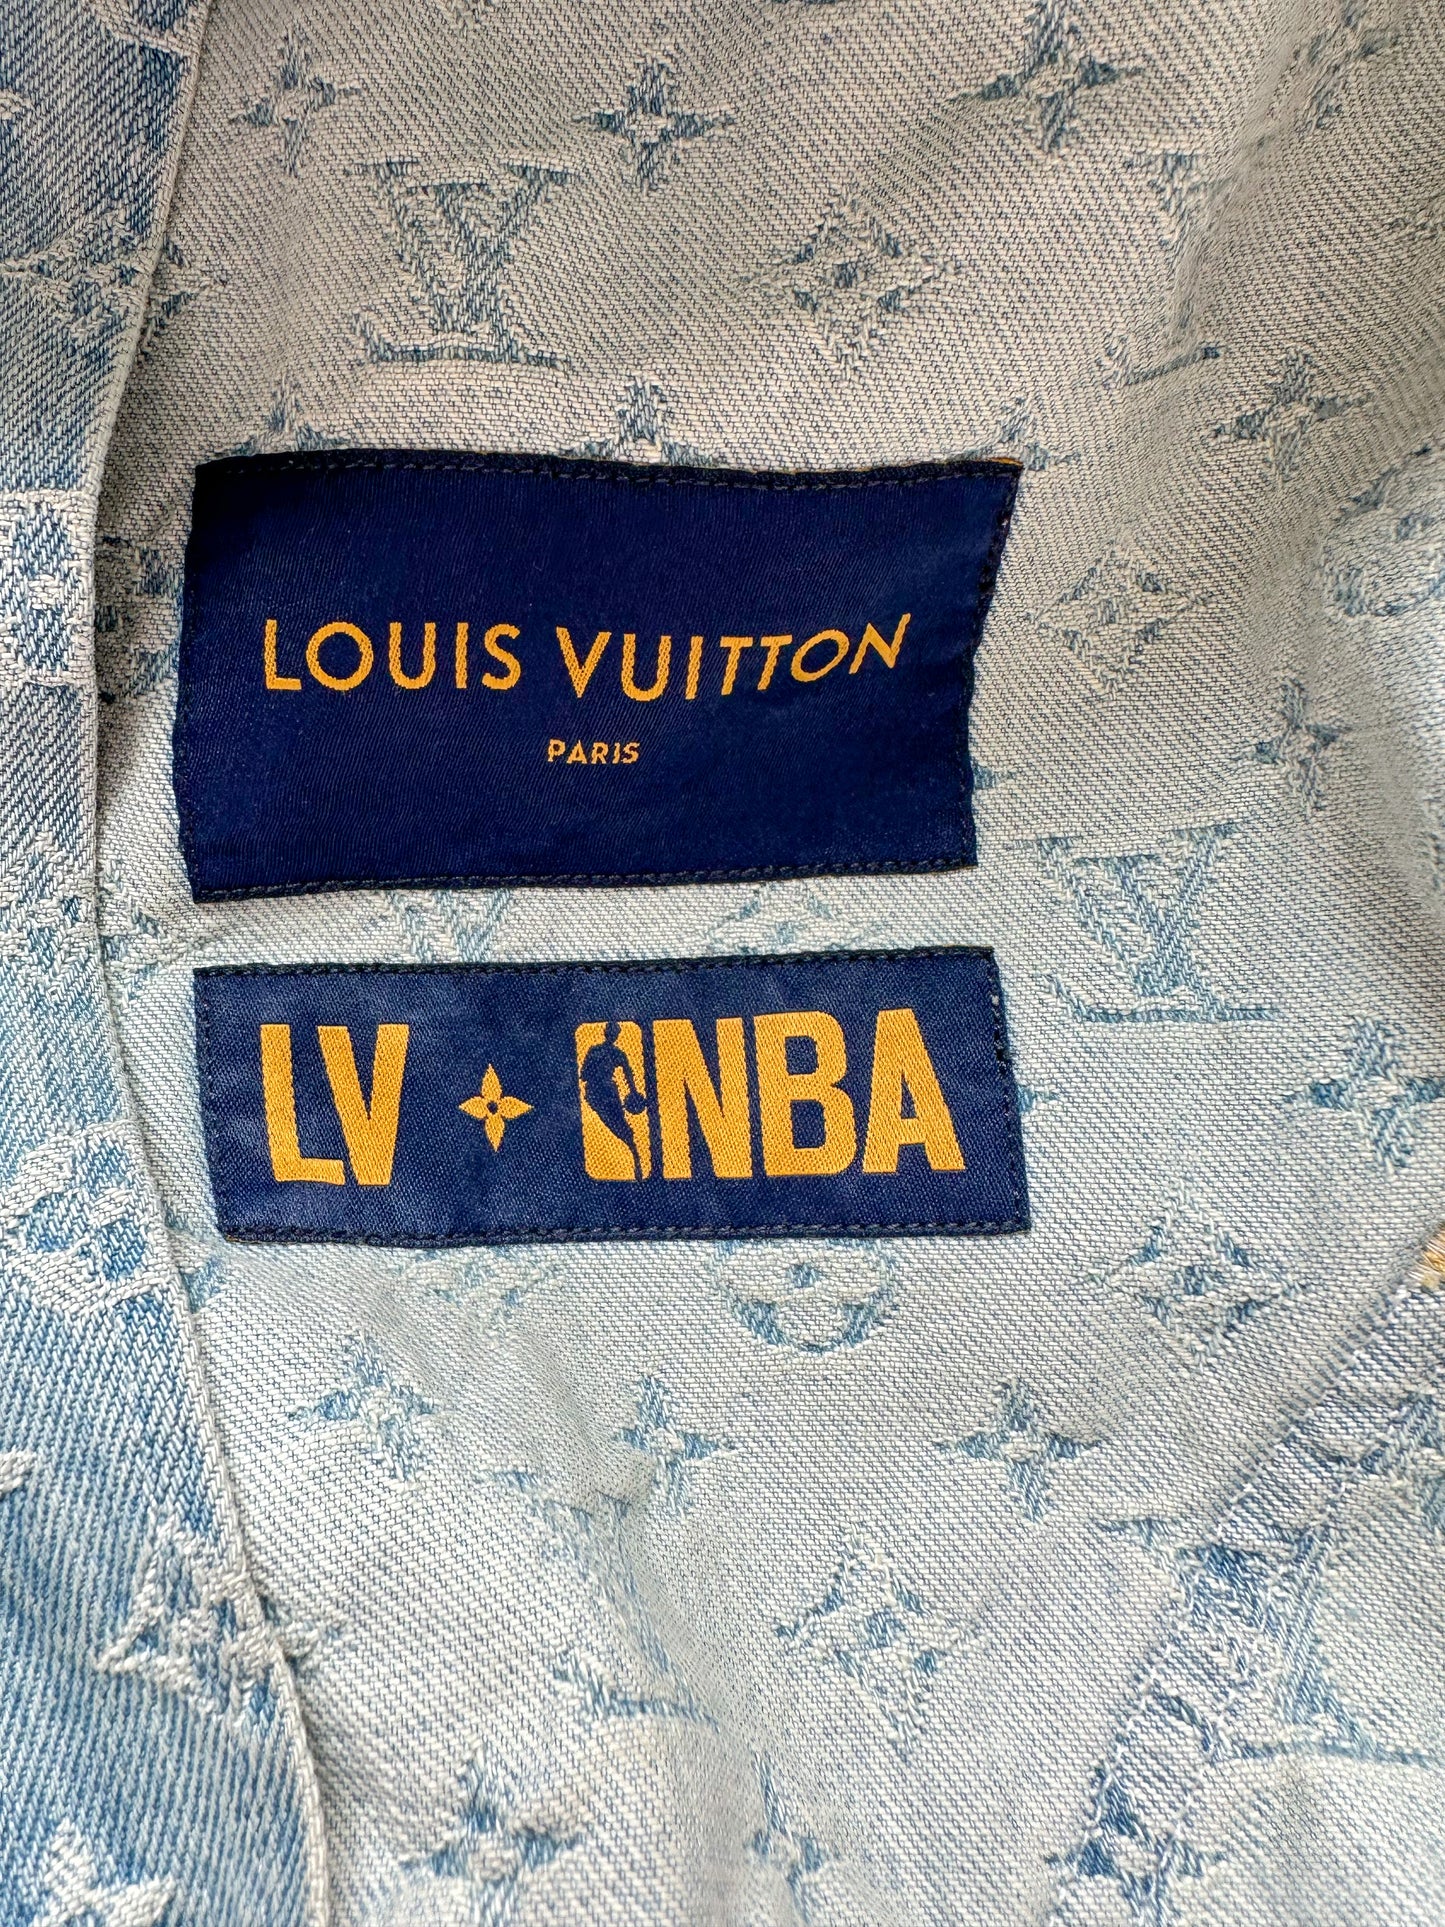 Preowned Louis Vuitton X Supreme Denim Barn Jacket Monogram Size